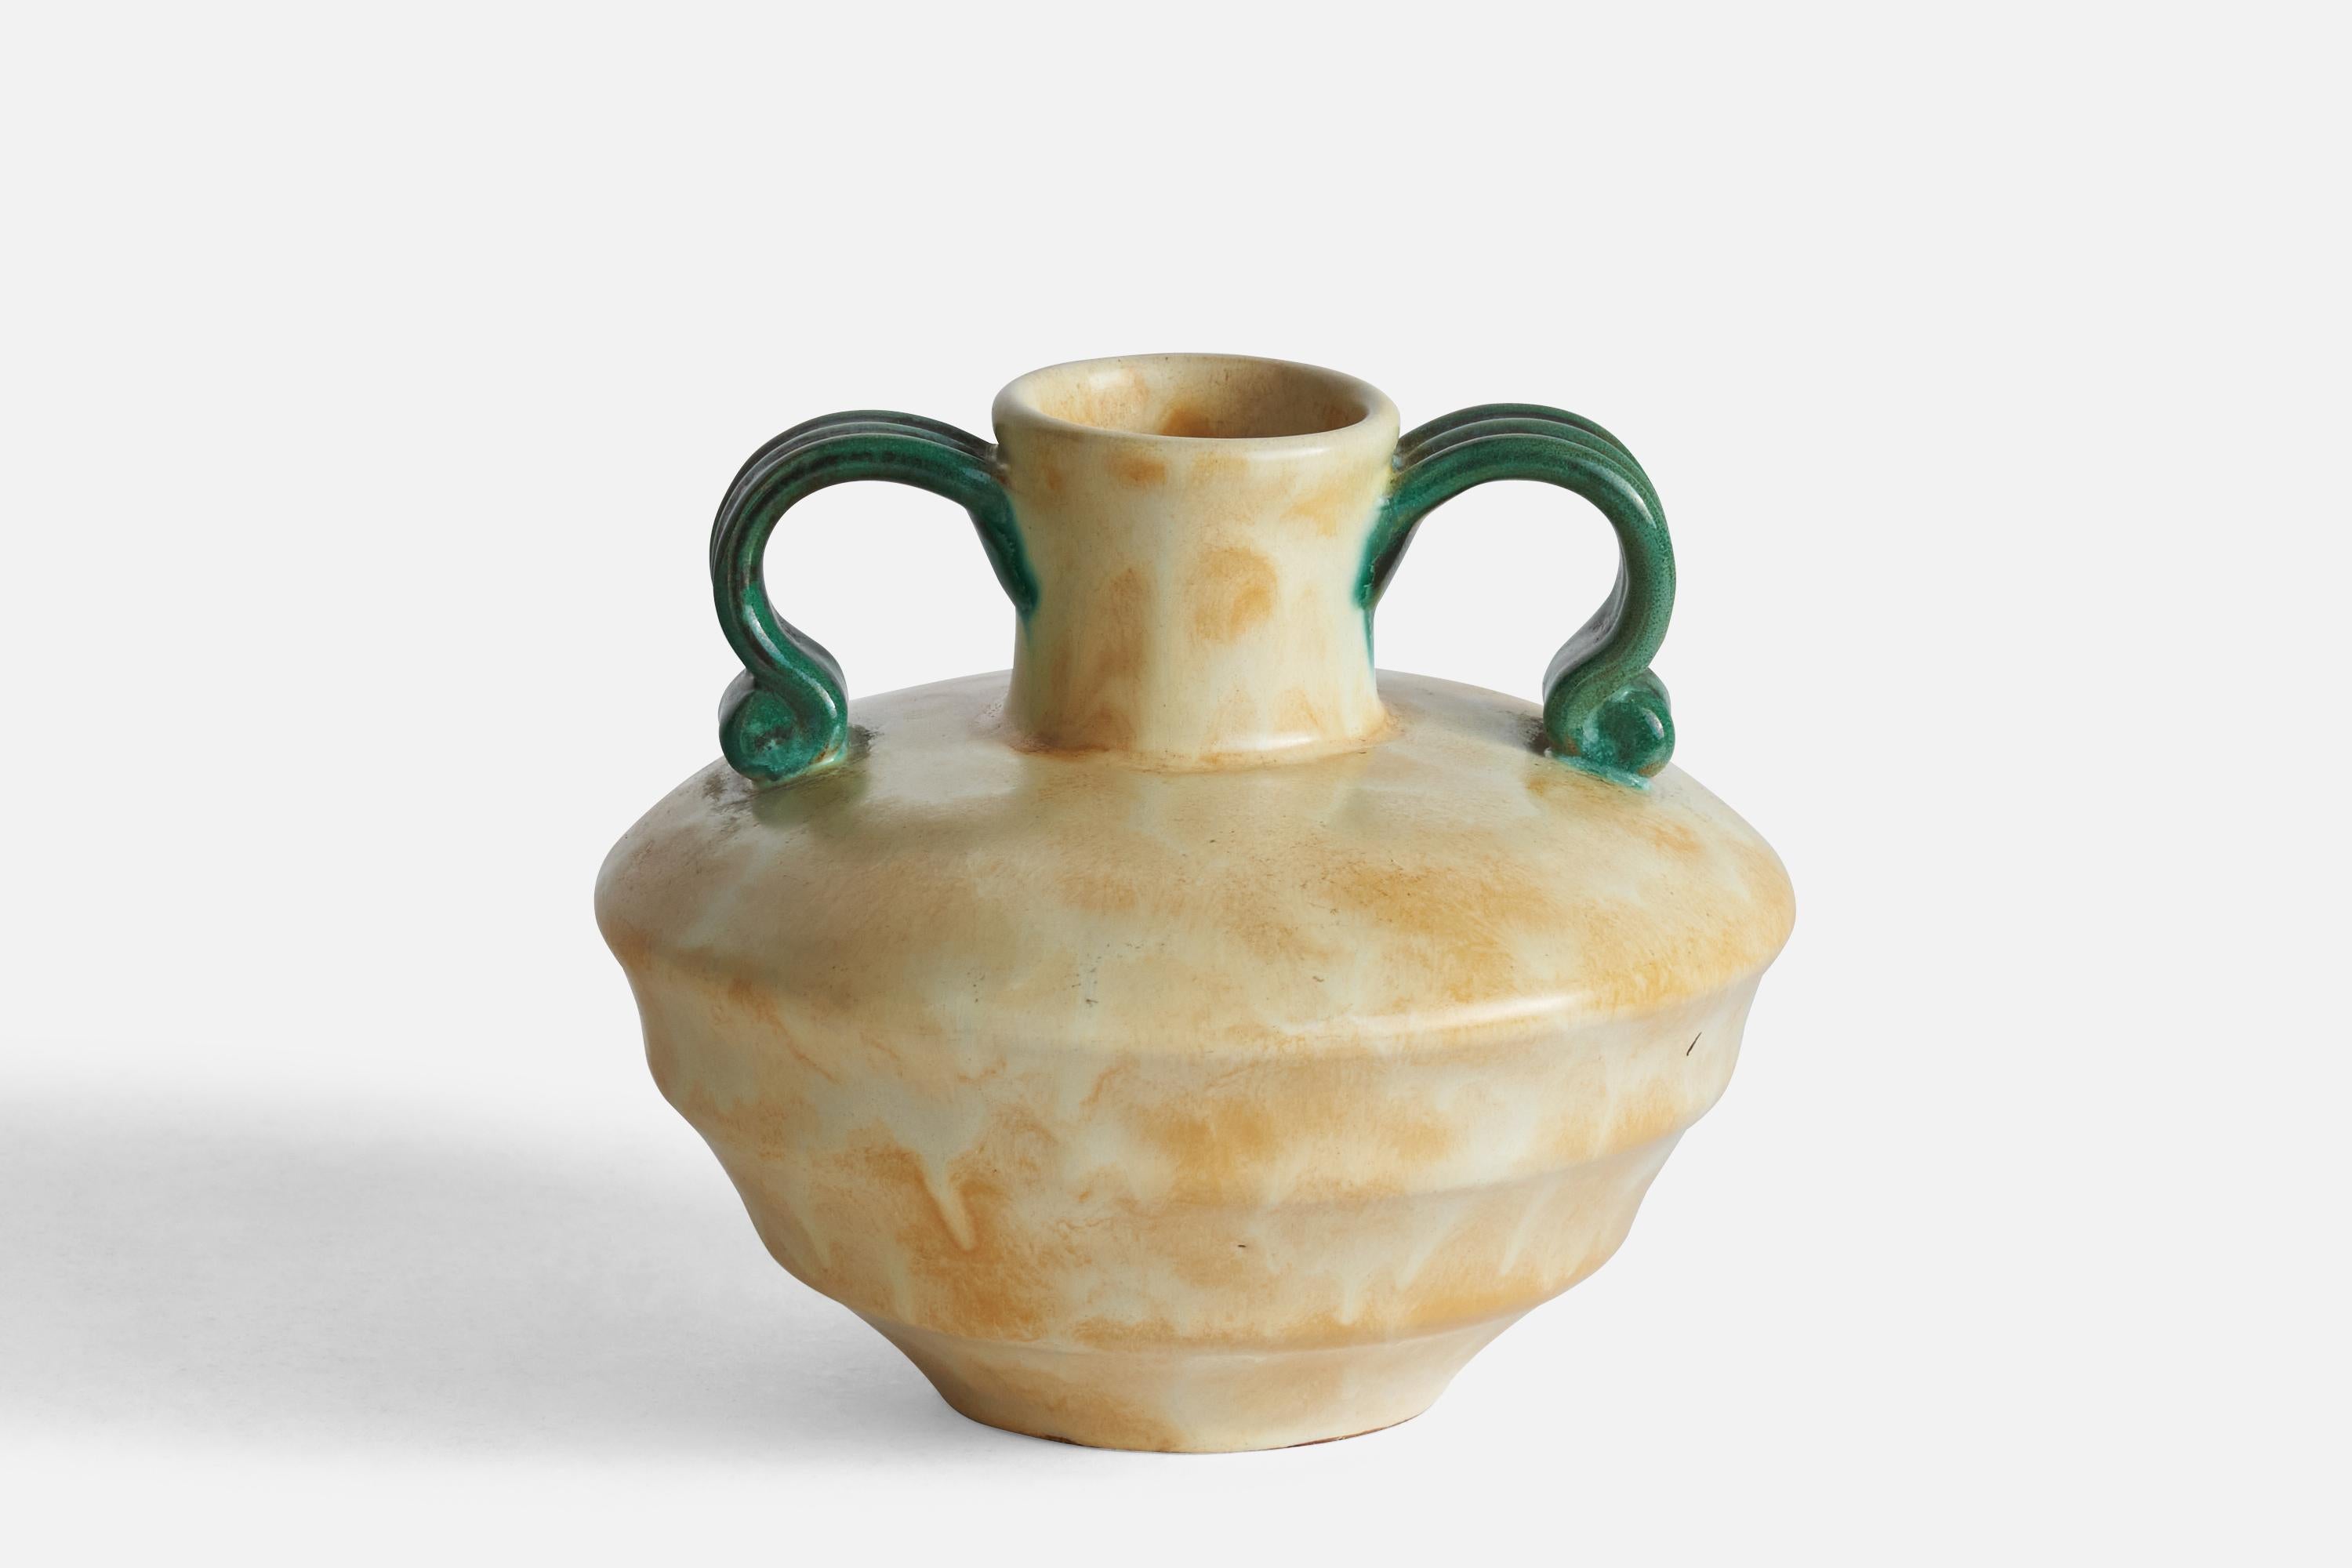 A beige and green-glazed earthenware vase designed and produced by Upsala Ekeby, Sweden, 1930s.